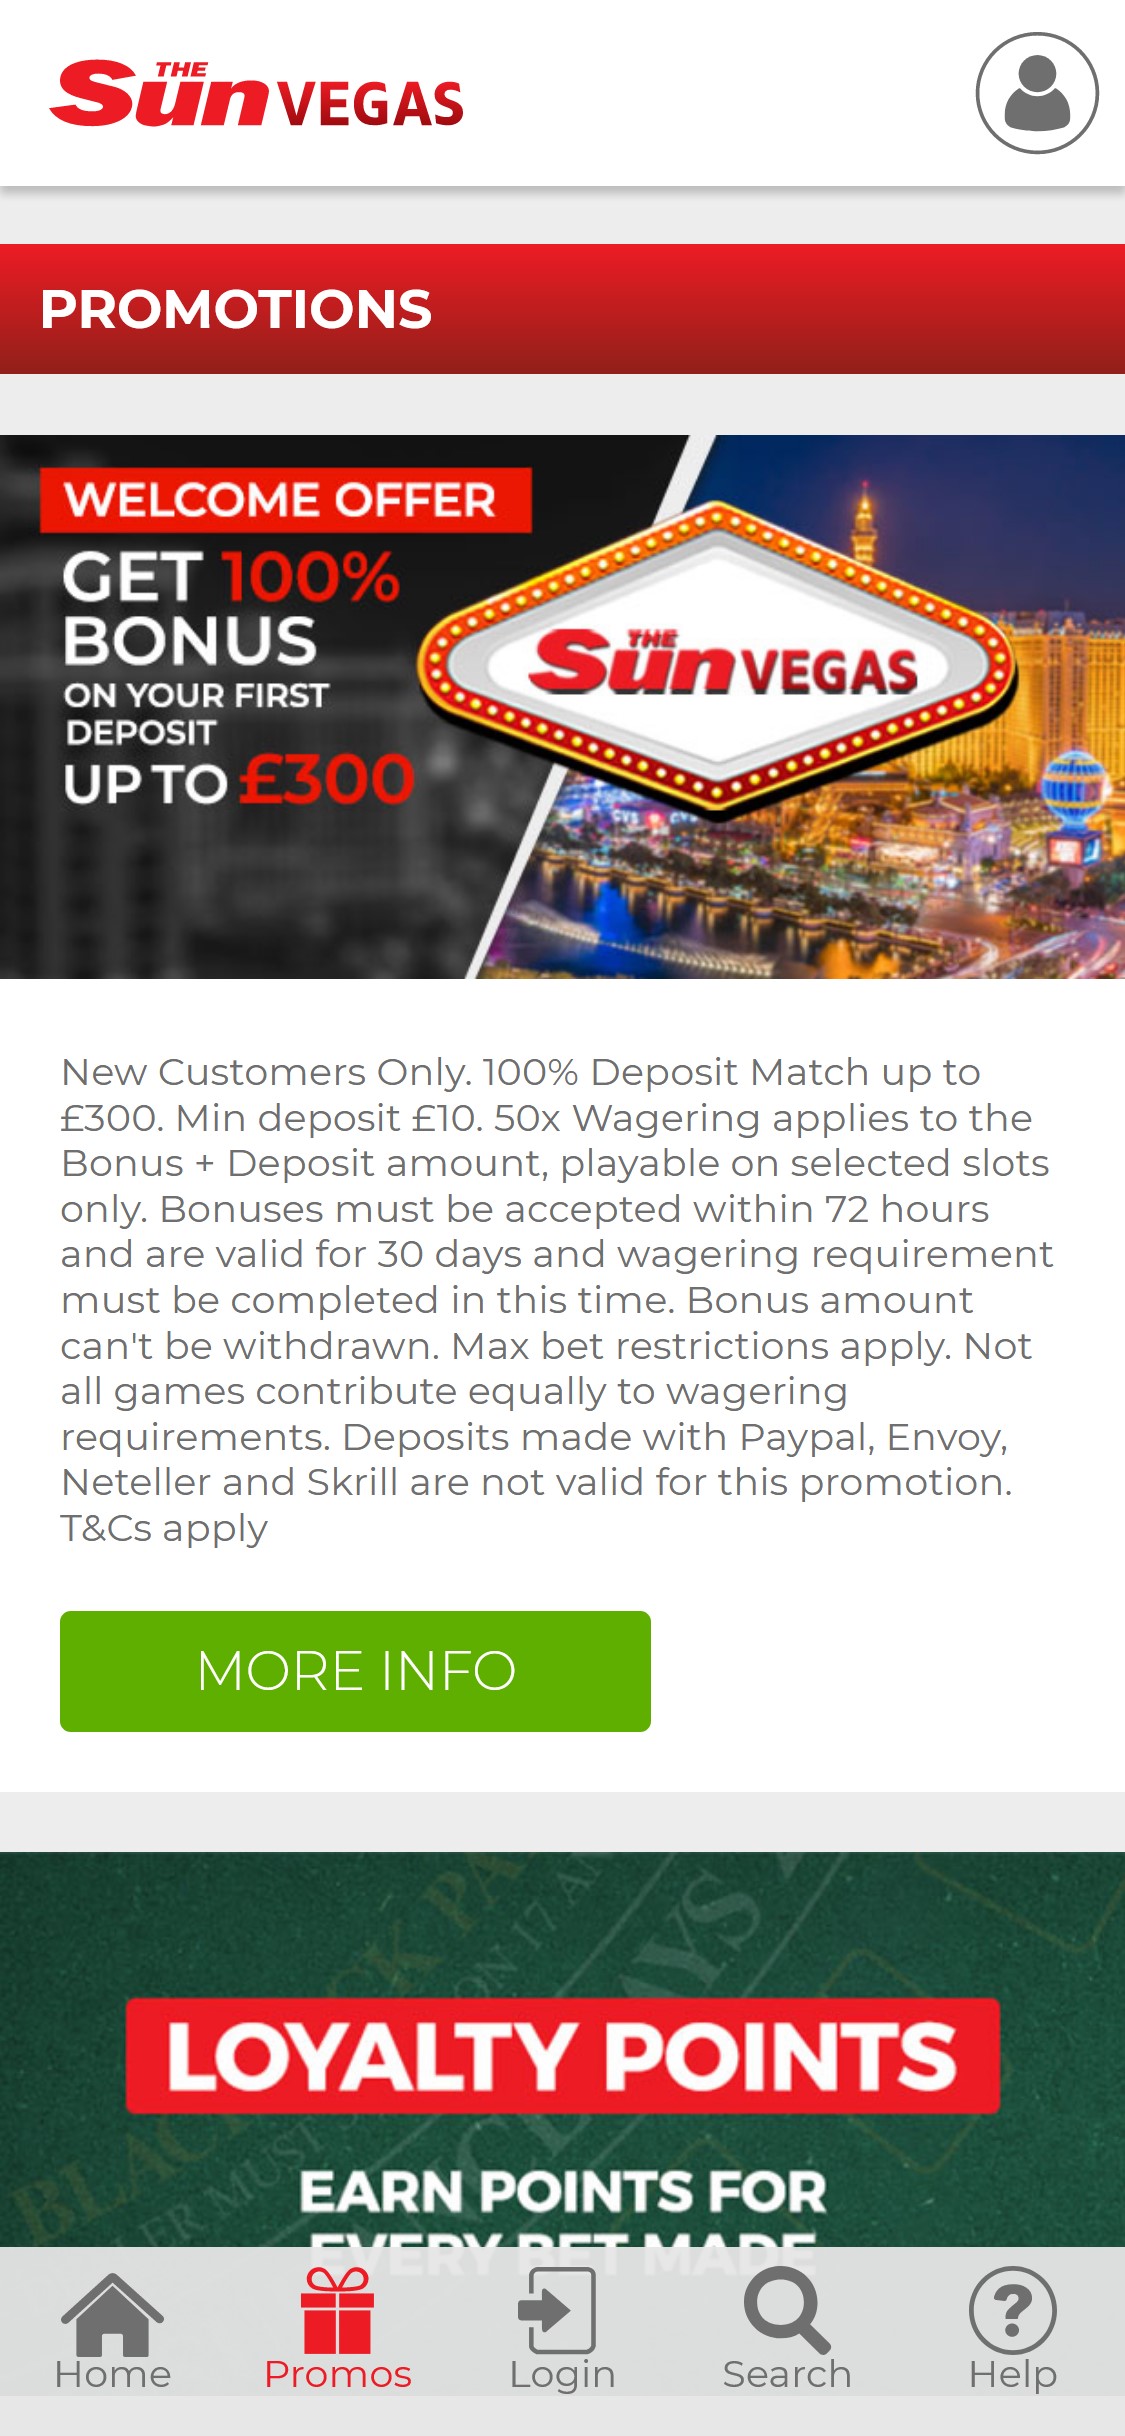 The Sun Vegas Casino Mobile No Deposit Bonus Review